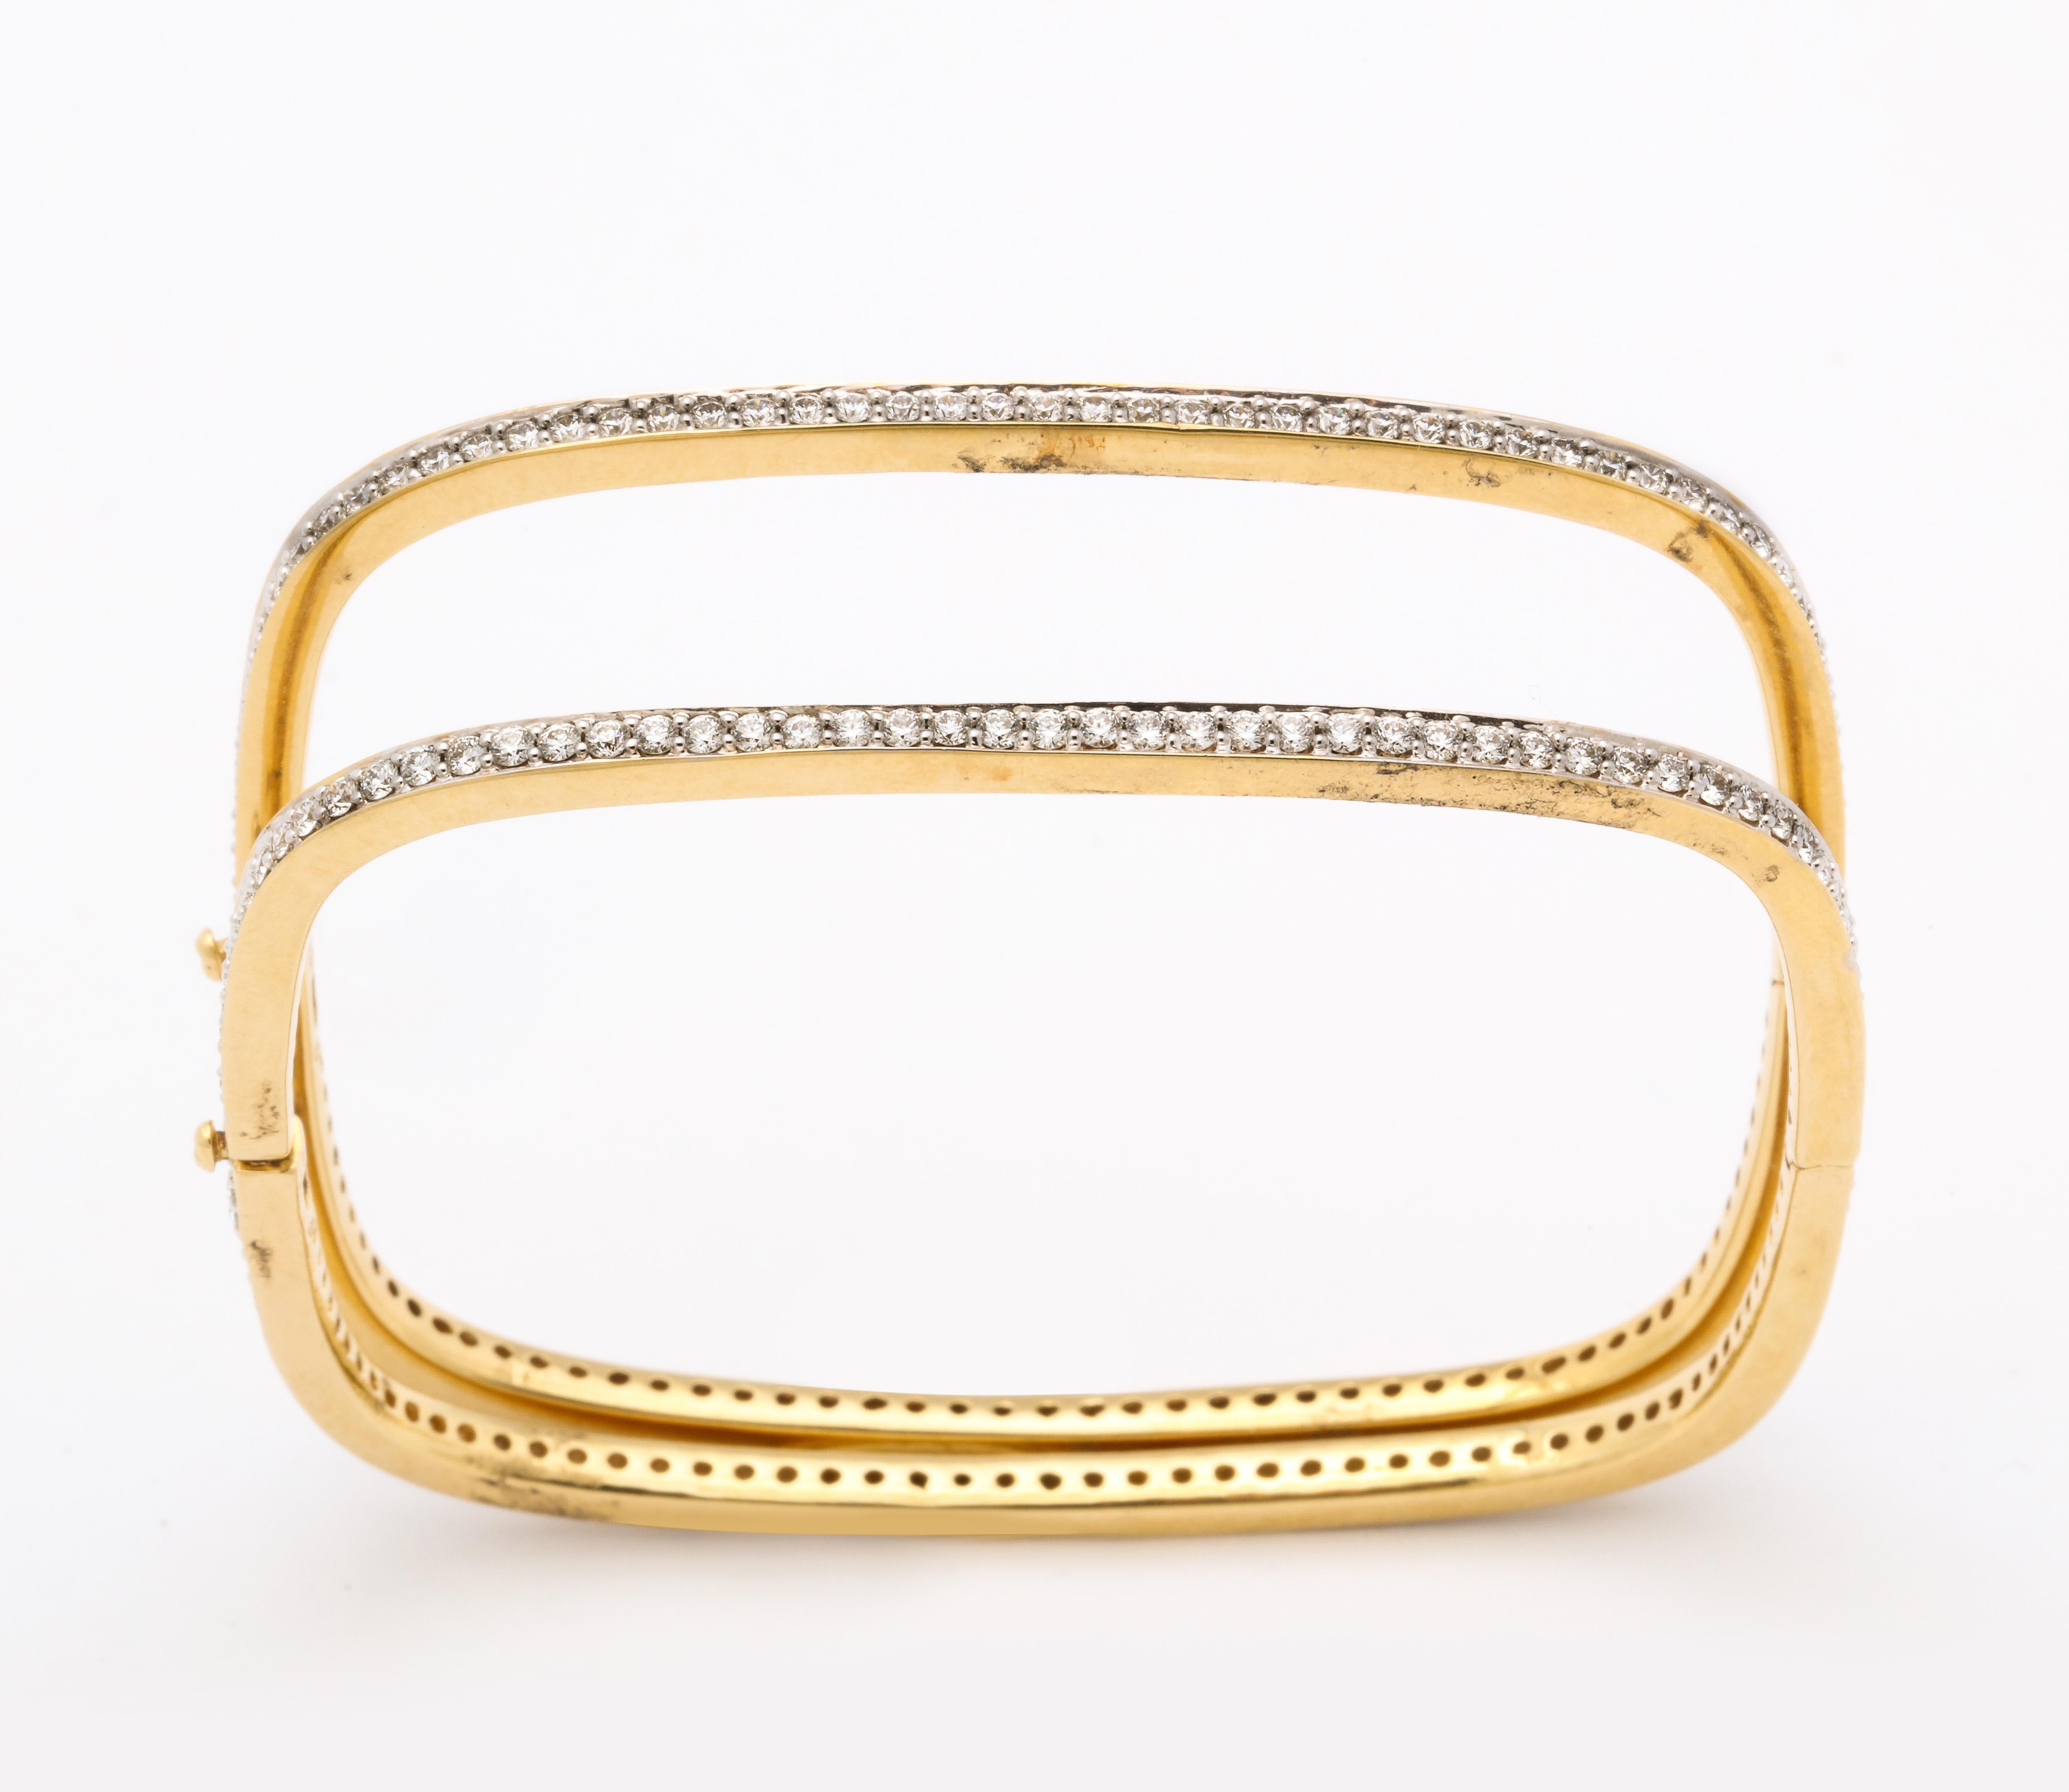 Modernist Pair of Square-Shape Diamond Bangle Bracelets